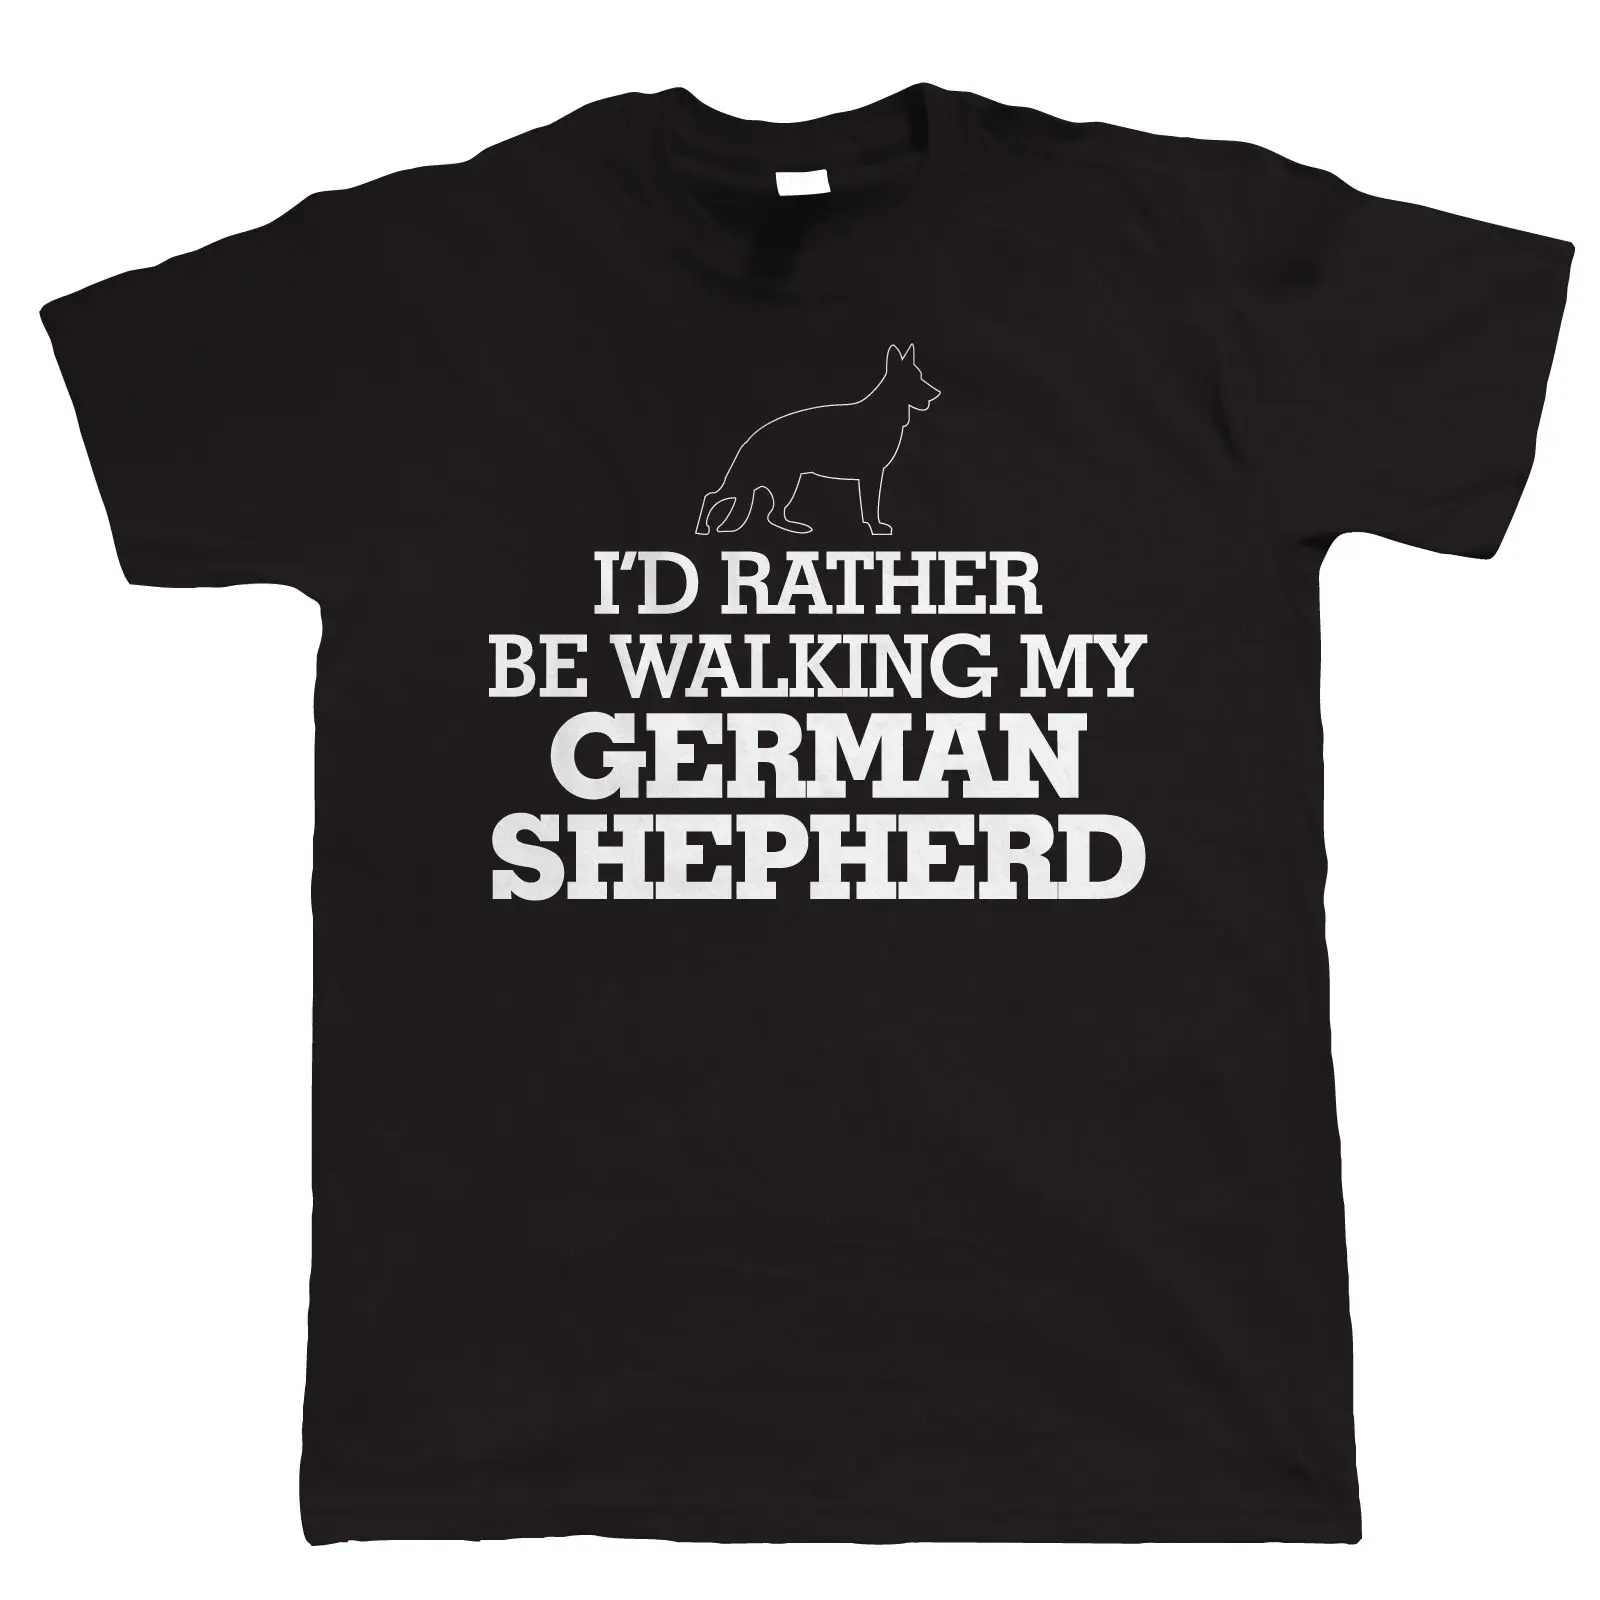 I'd Rather Be Dog Walking T-Shirt